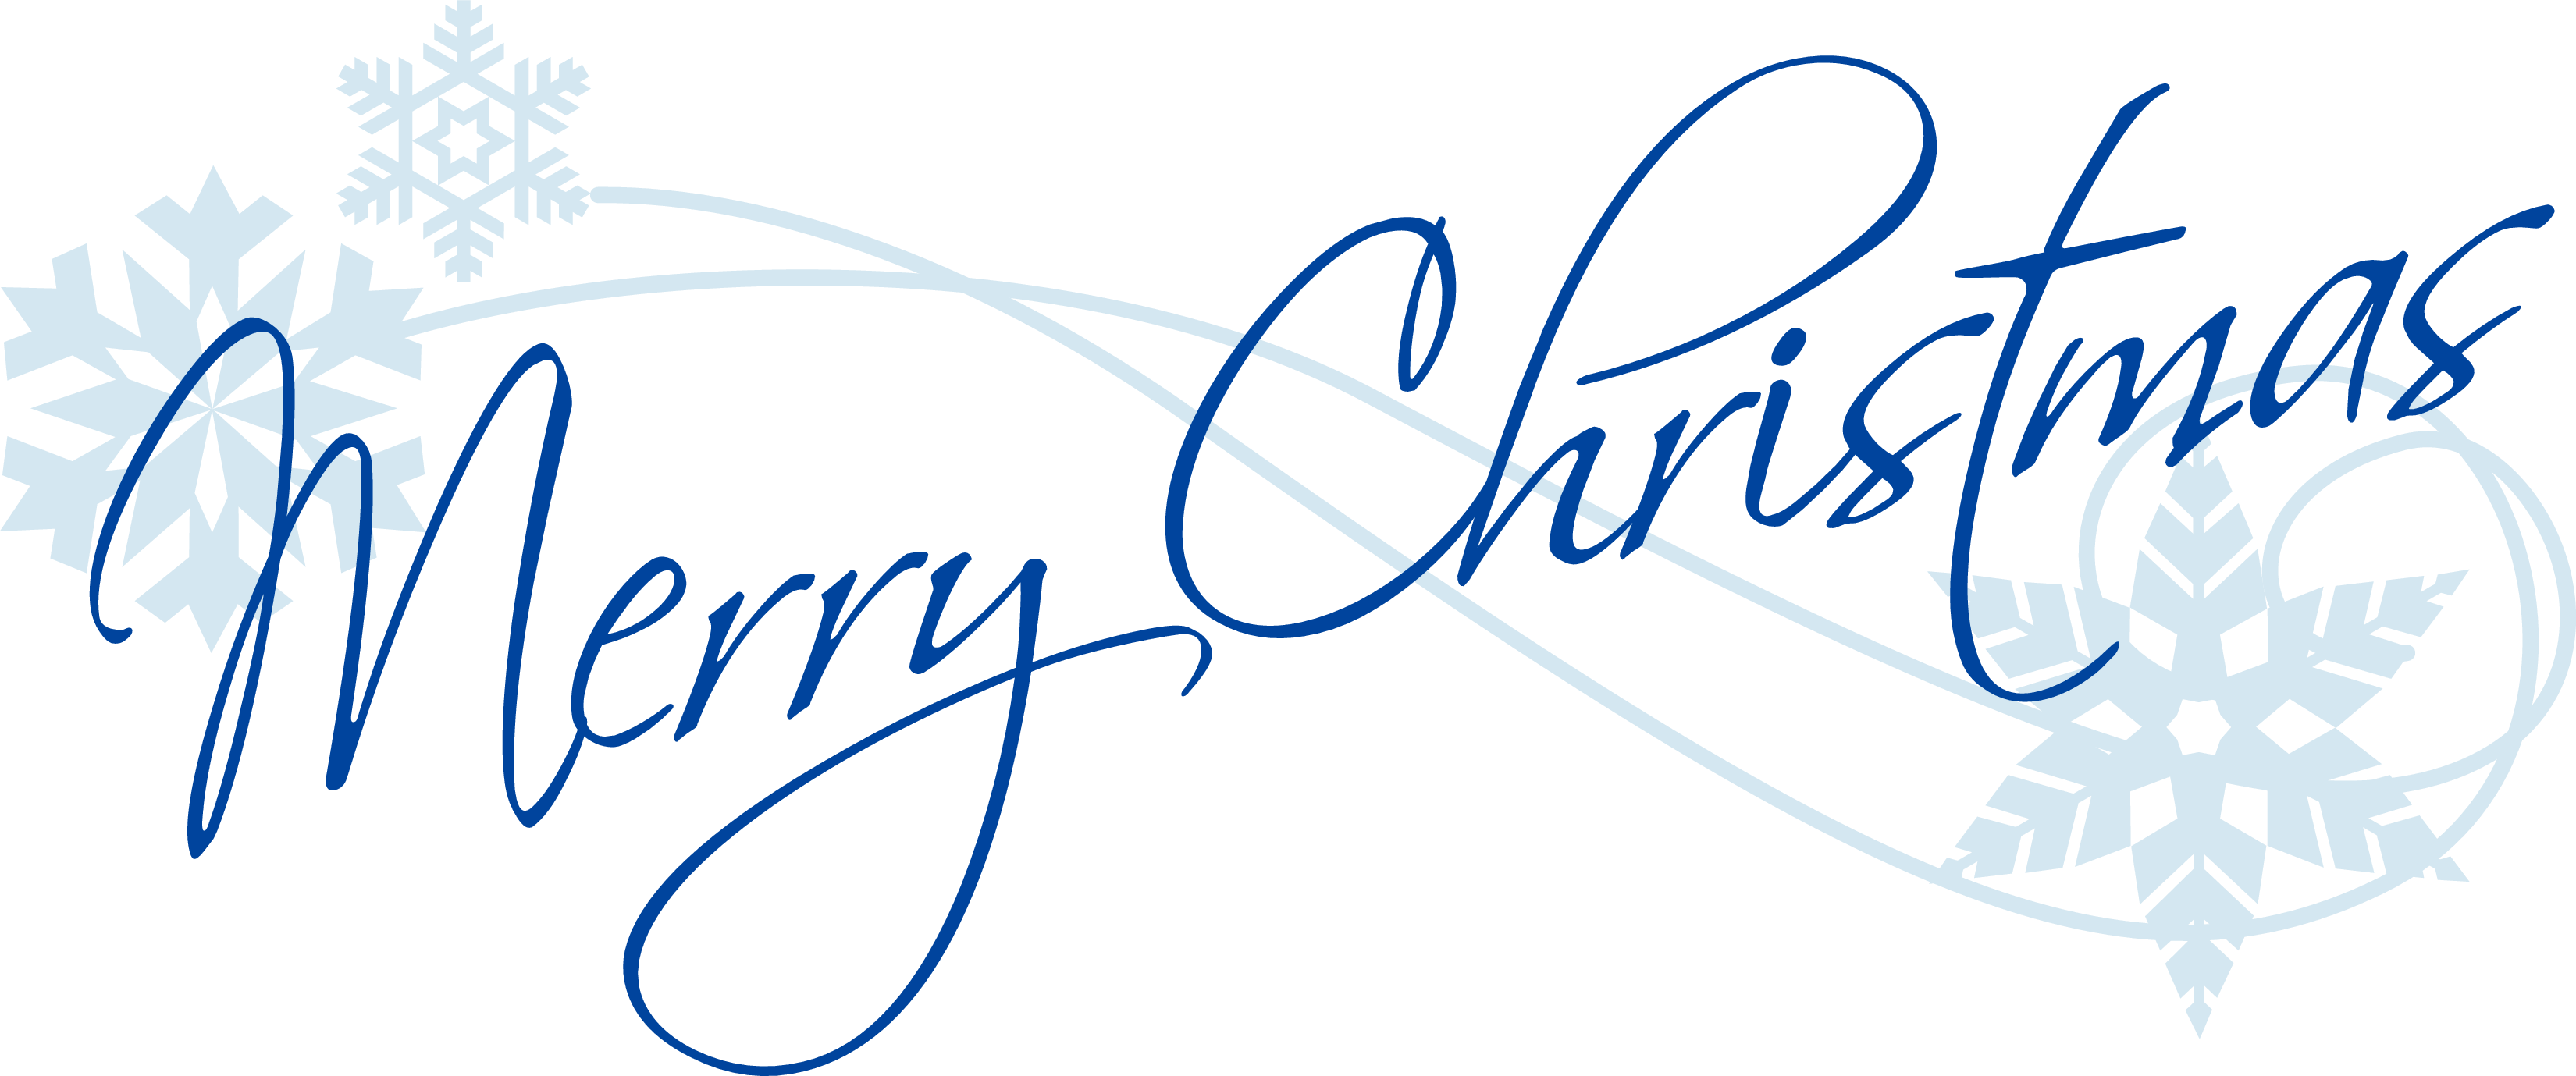 holidays clipart signature